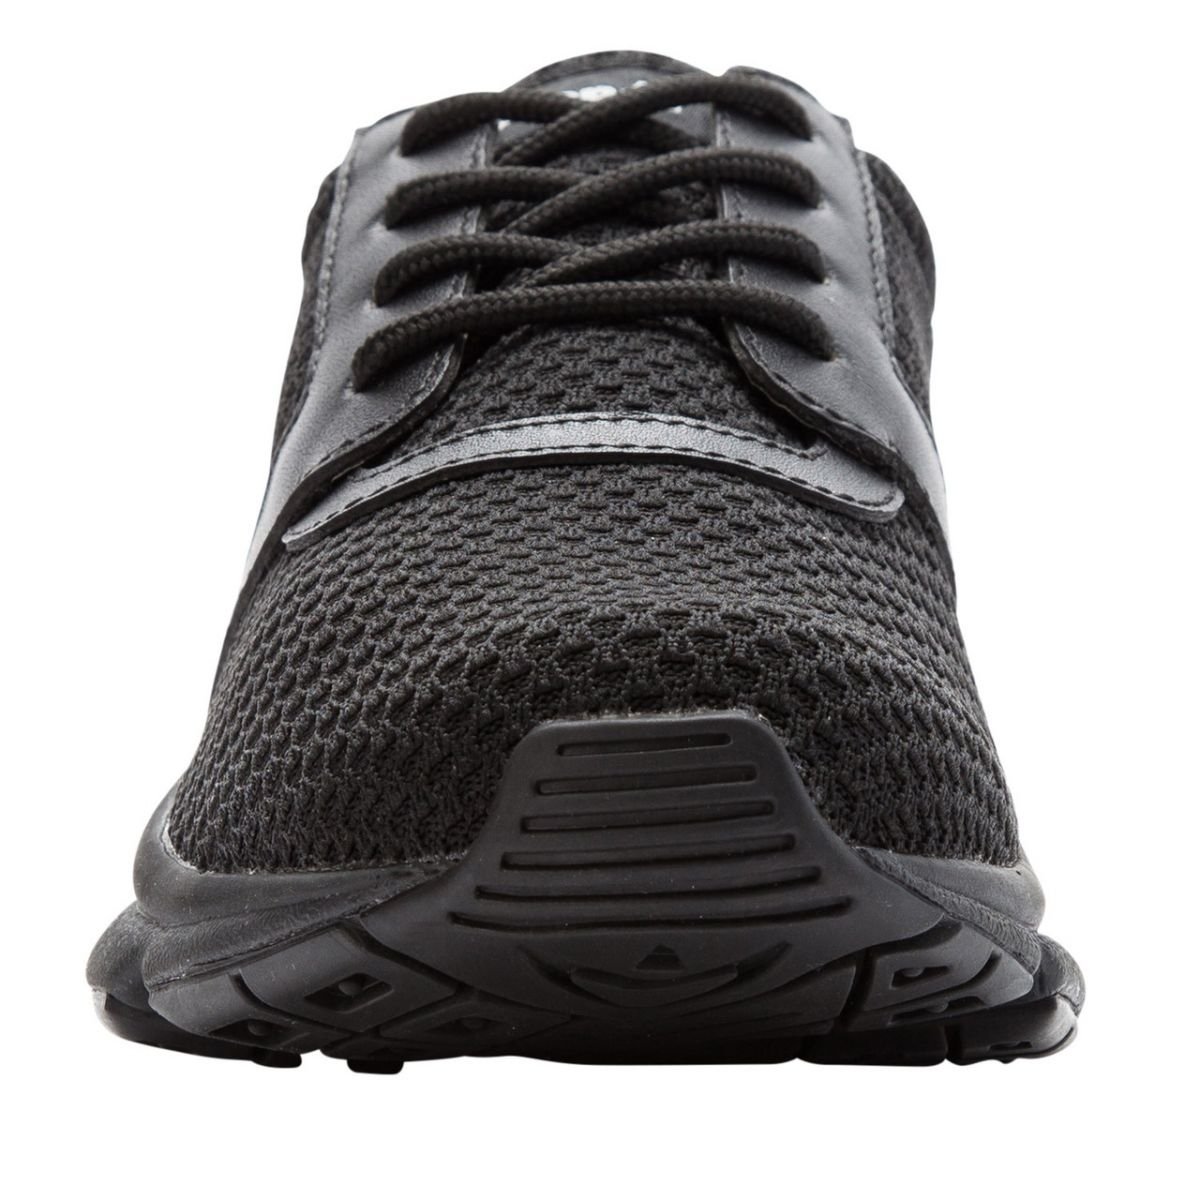 Propet Women's Stability X Walking Shoe Black - WAA032MBLK BLACK - BLACK, 7 Narrow